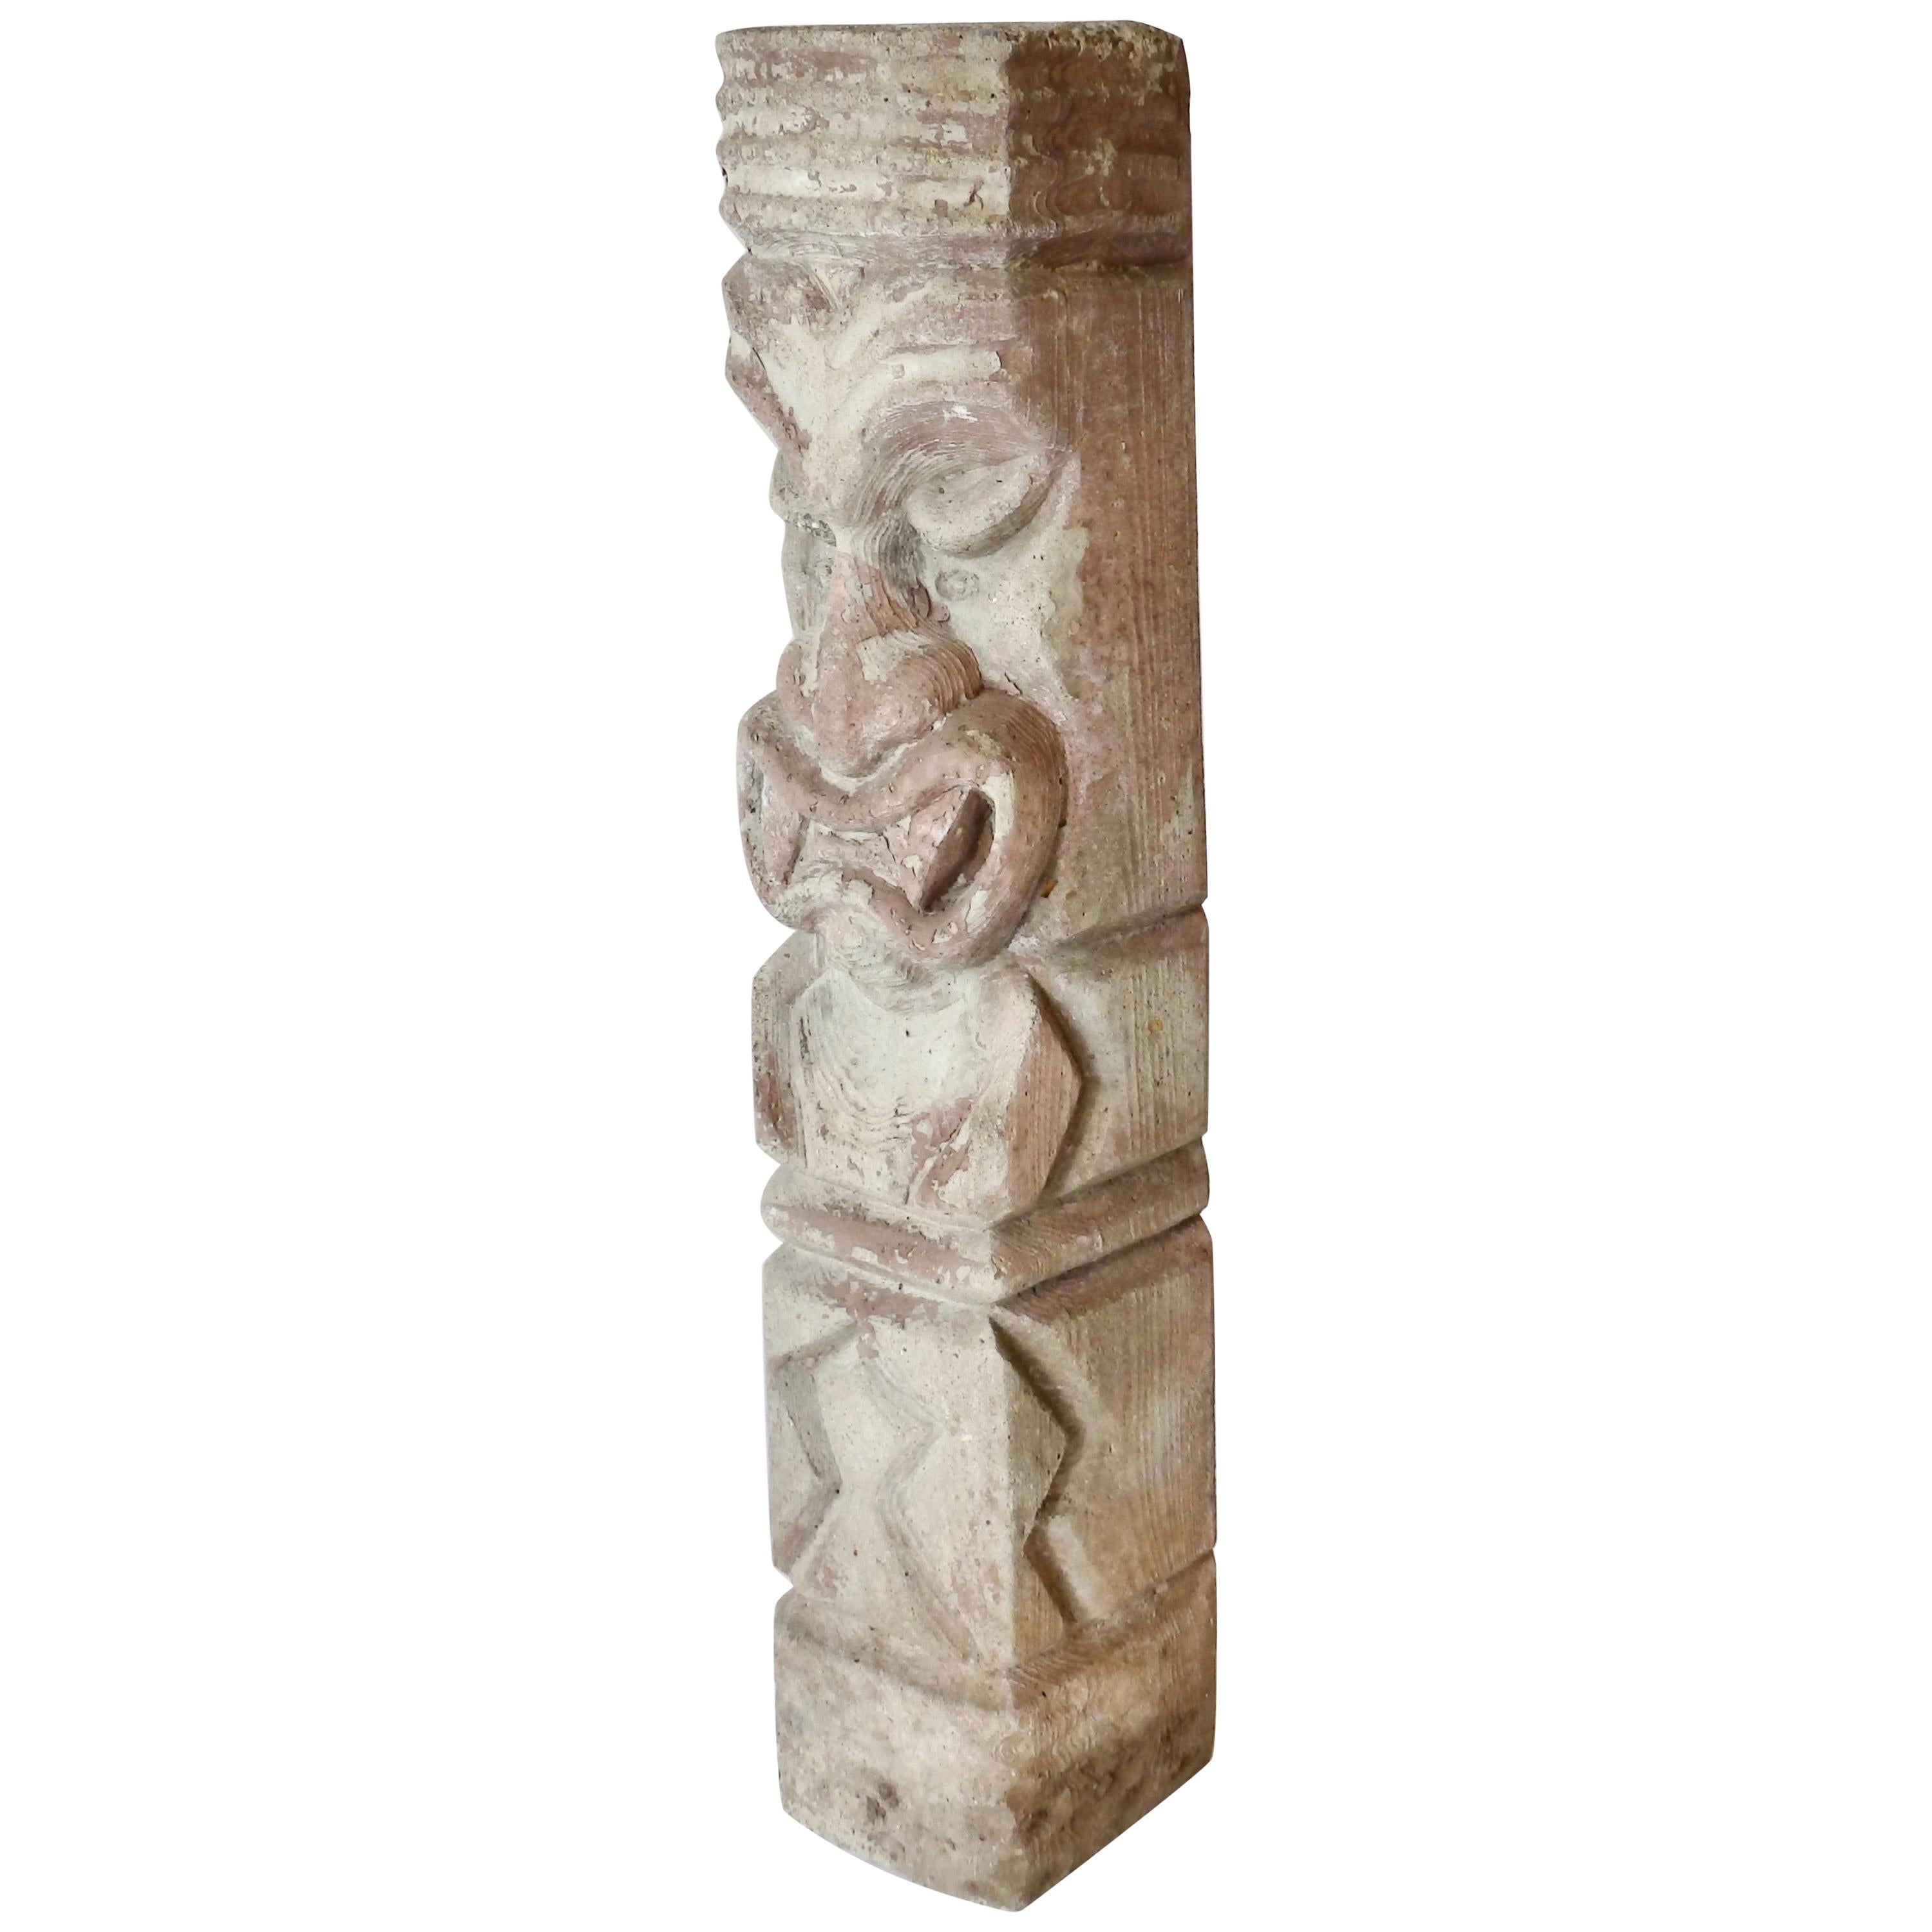 Heavy cast cement Tiki totem sculpture